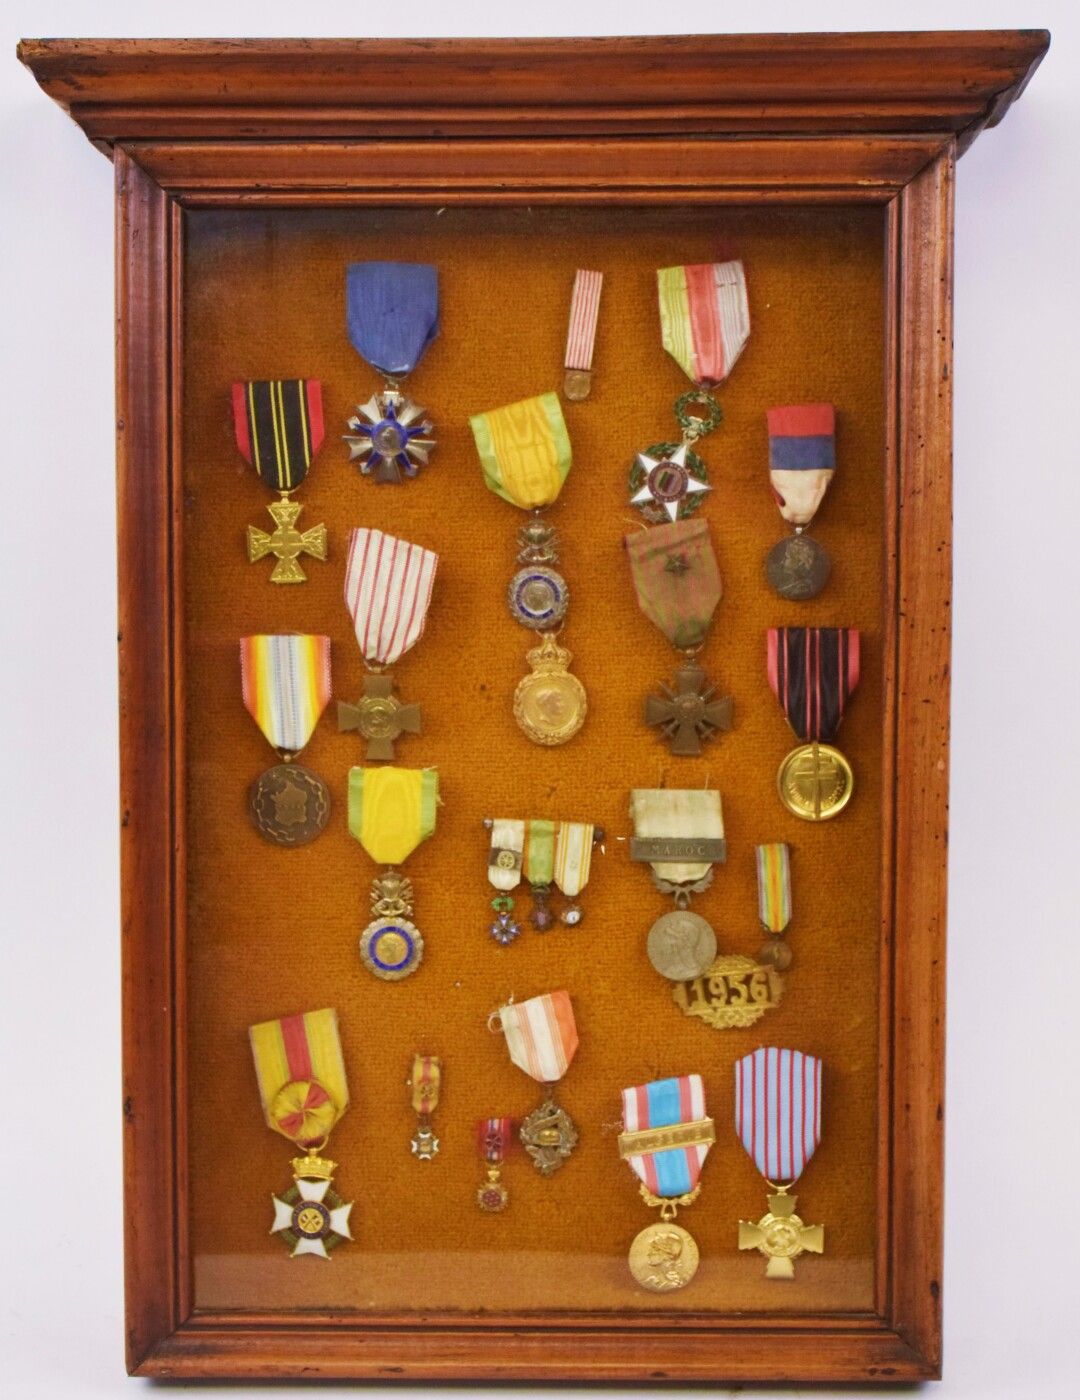 Null [MILITARIA]

Encadrement contenant 16 médailles dont: 

- Croix du combatta&hellip;